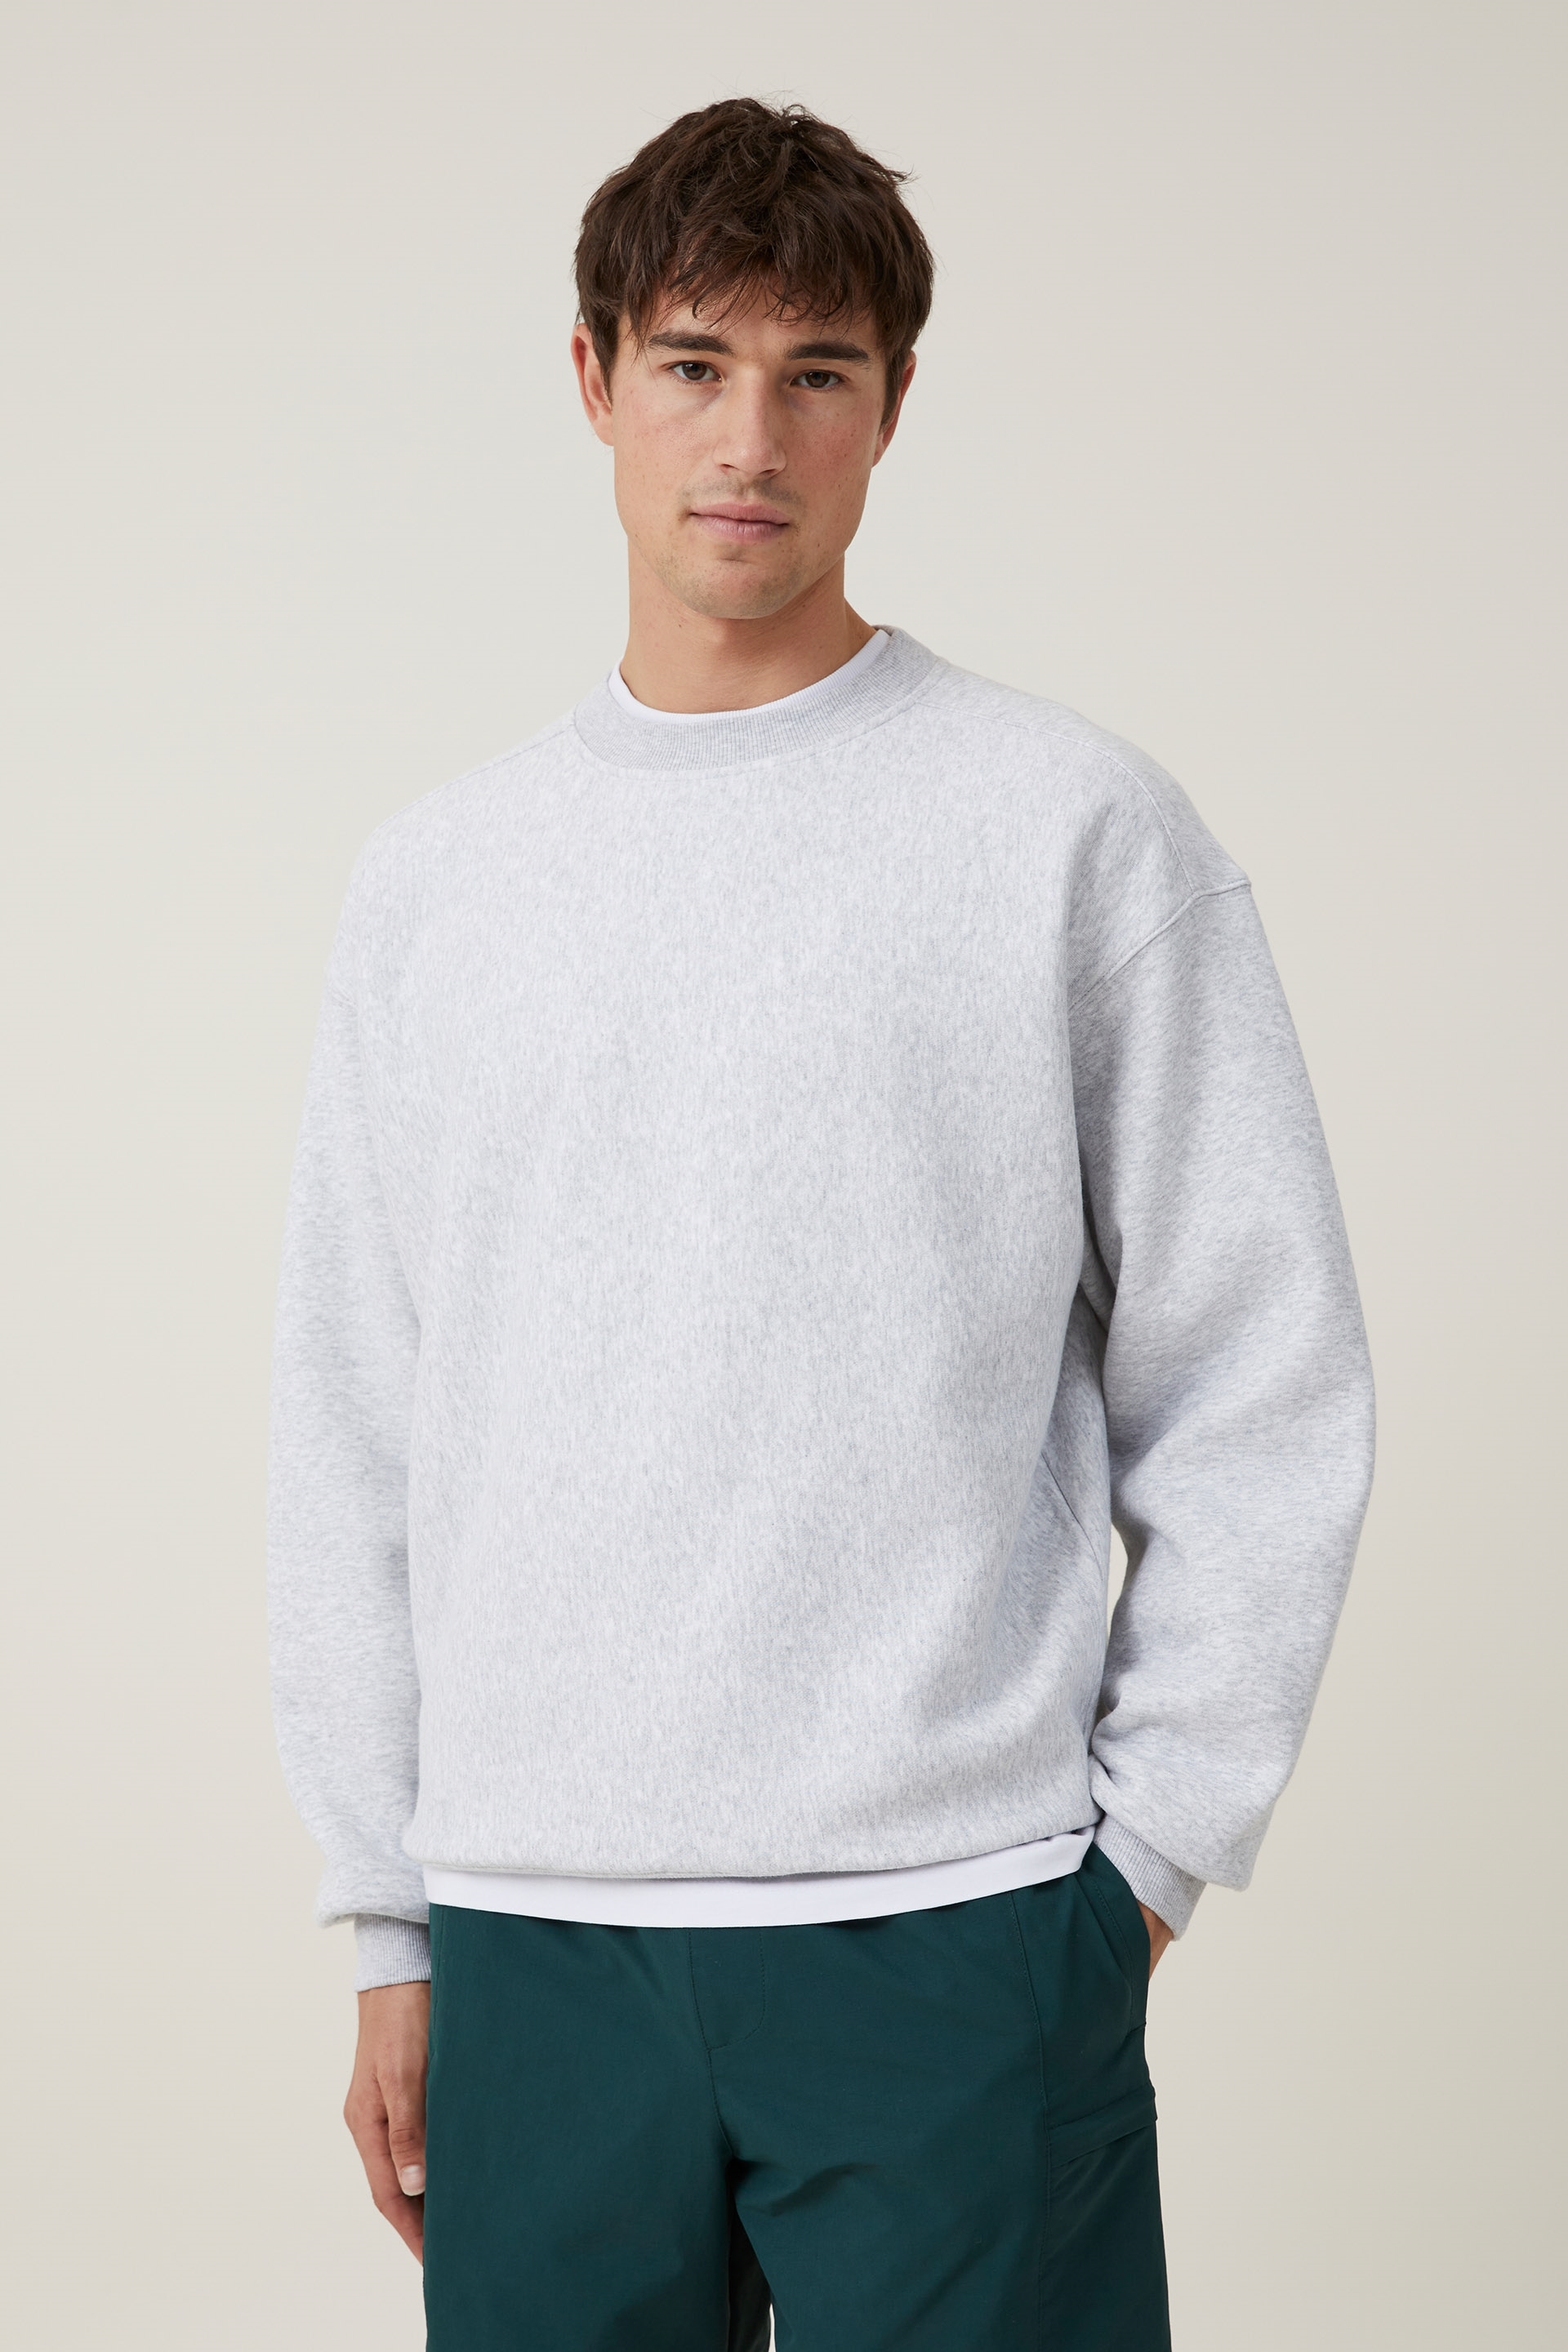 Cotton On Men - Oversized Crew Sweater - Grey marle